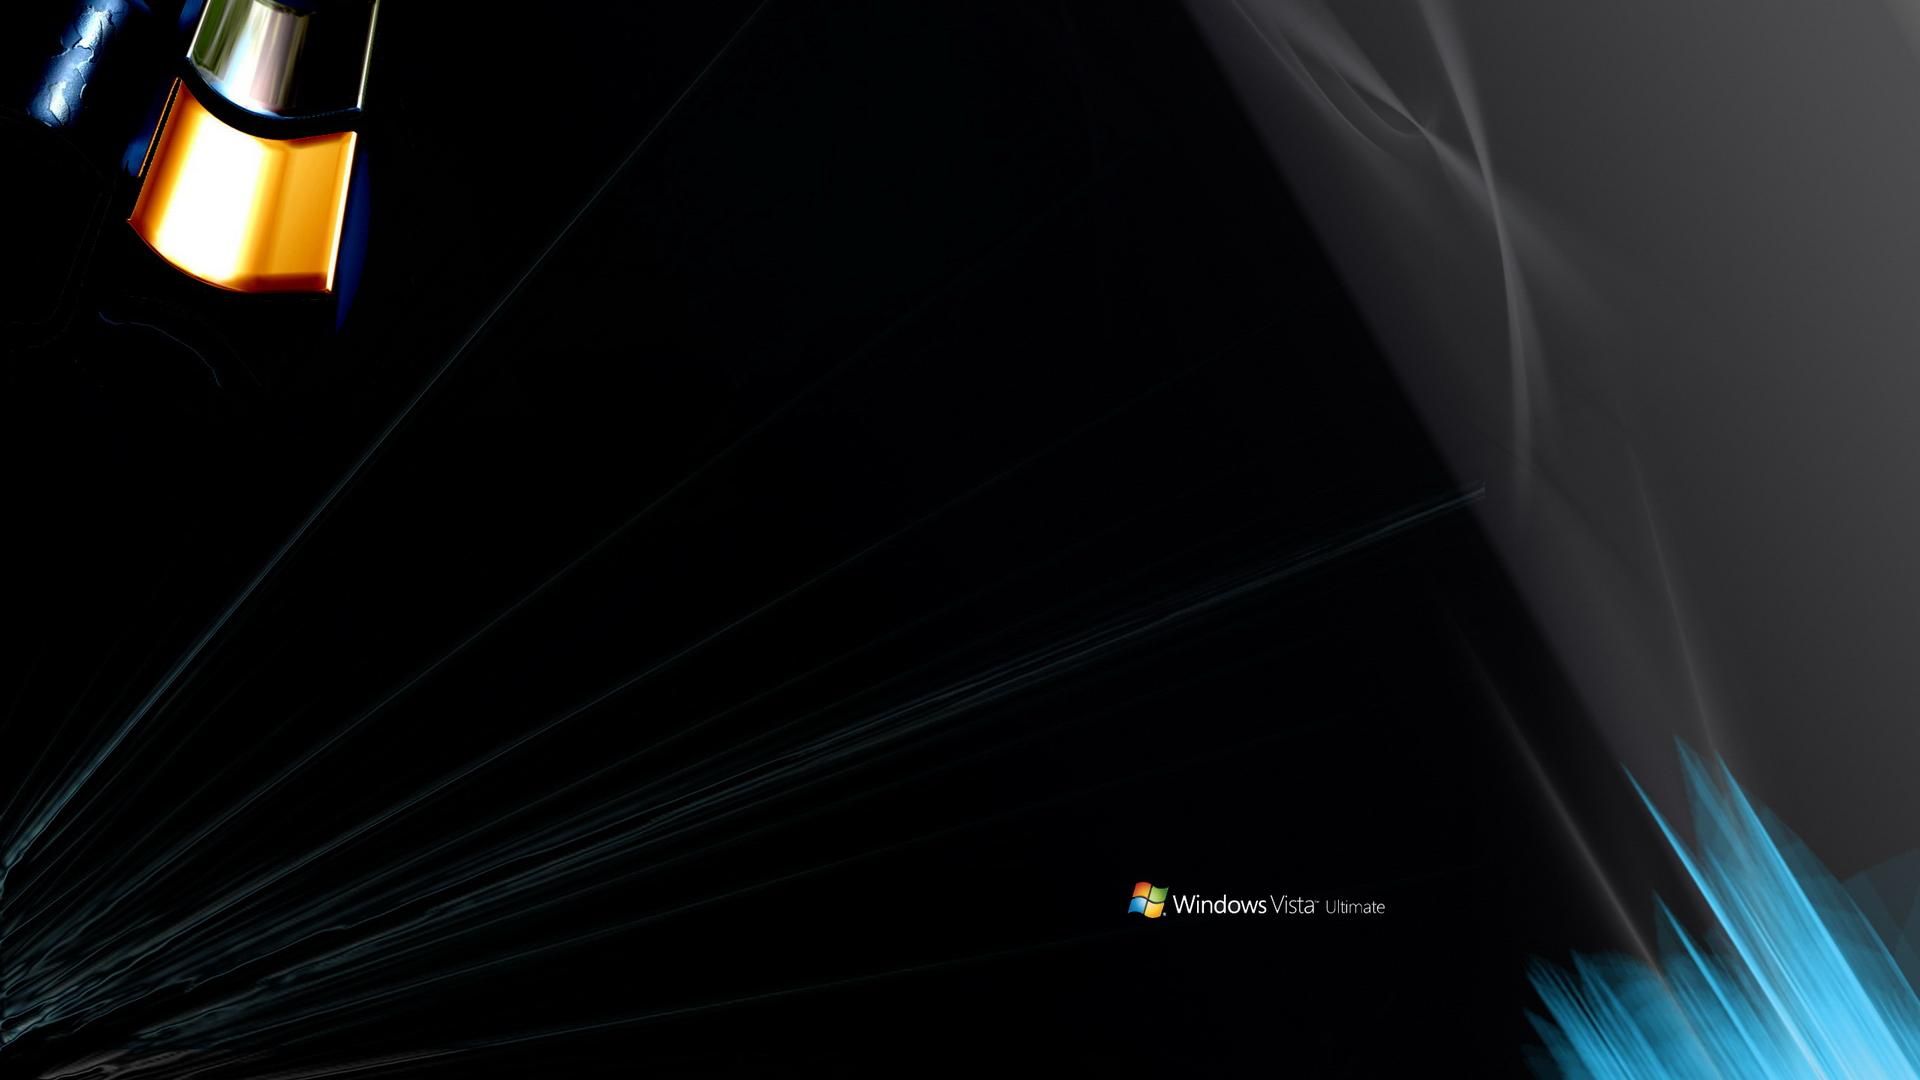 Windows Vista Ultimate Desktop Backgrounds Widescreen and HD